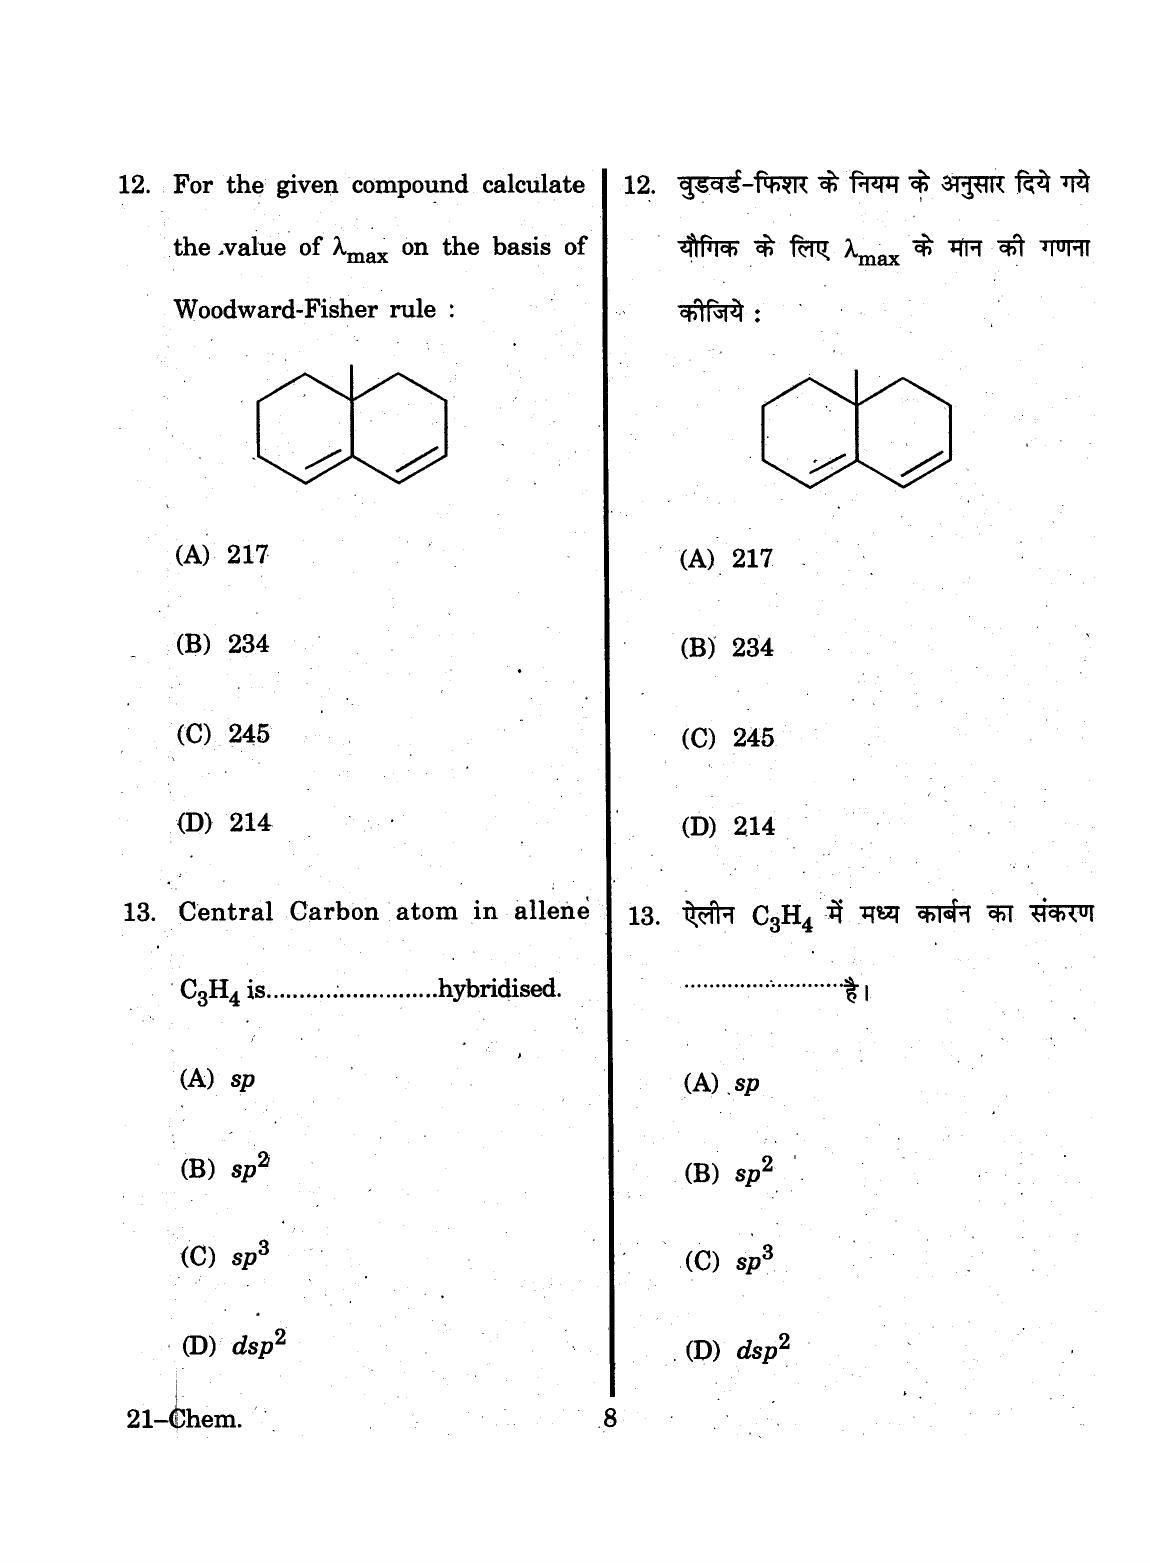 URATPG 2015 Chemisty Question Paper - Page 8